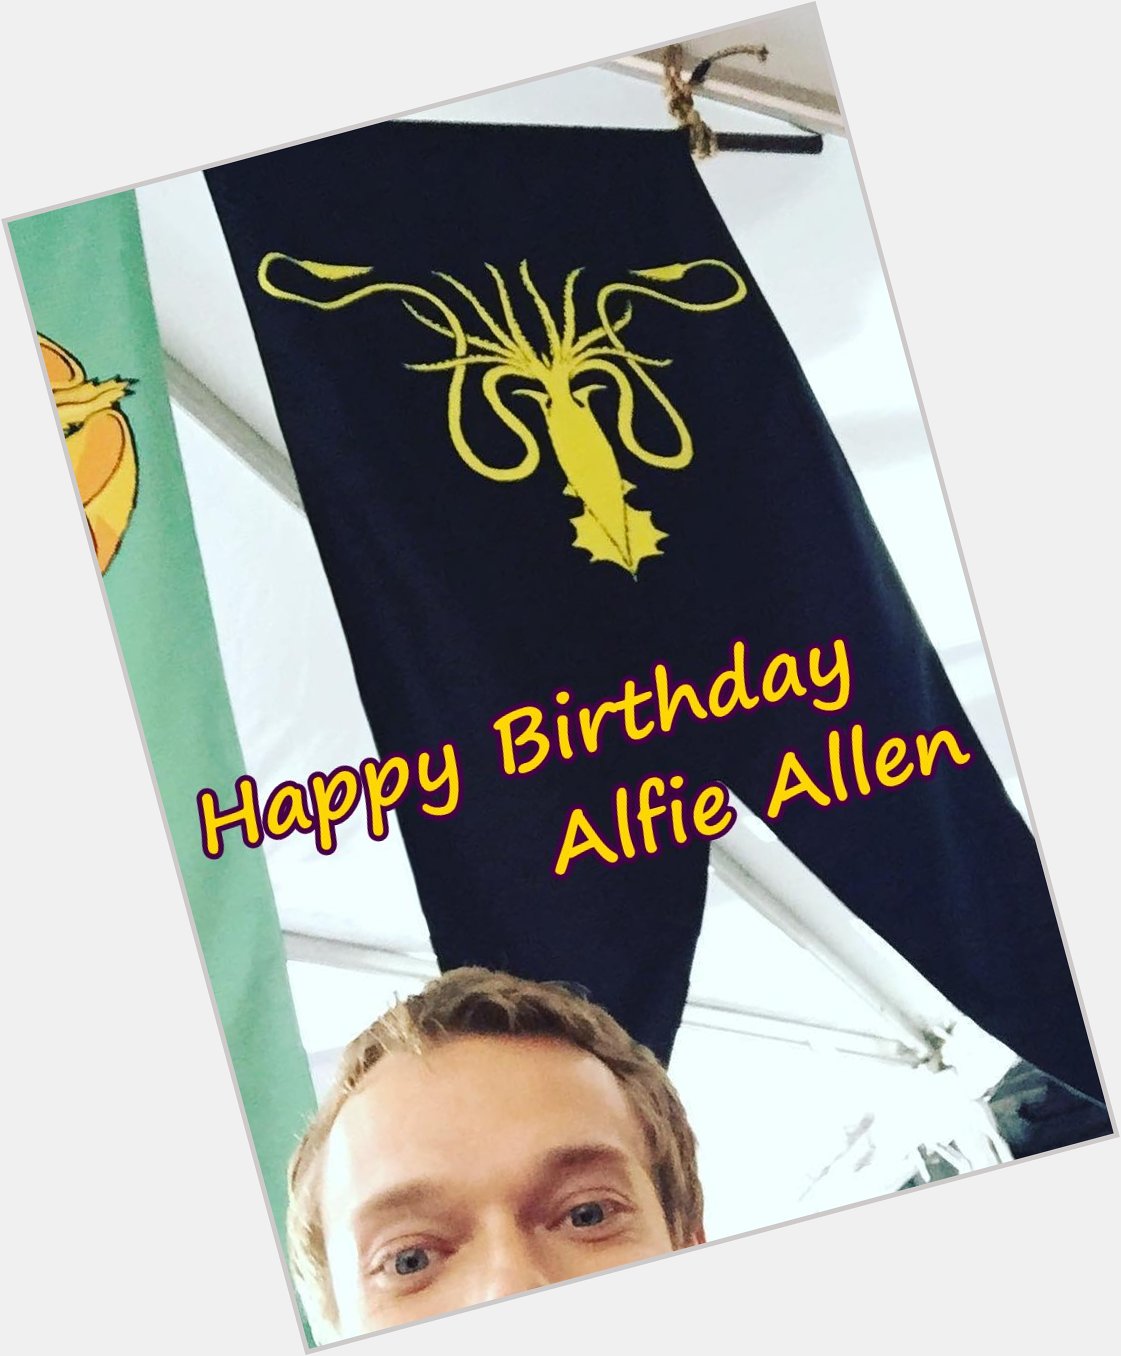 Happy 31st Birthday Alfie Allen!!       